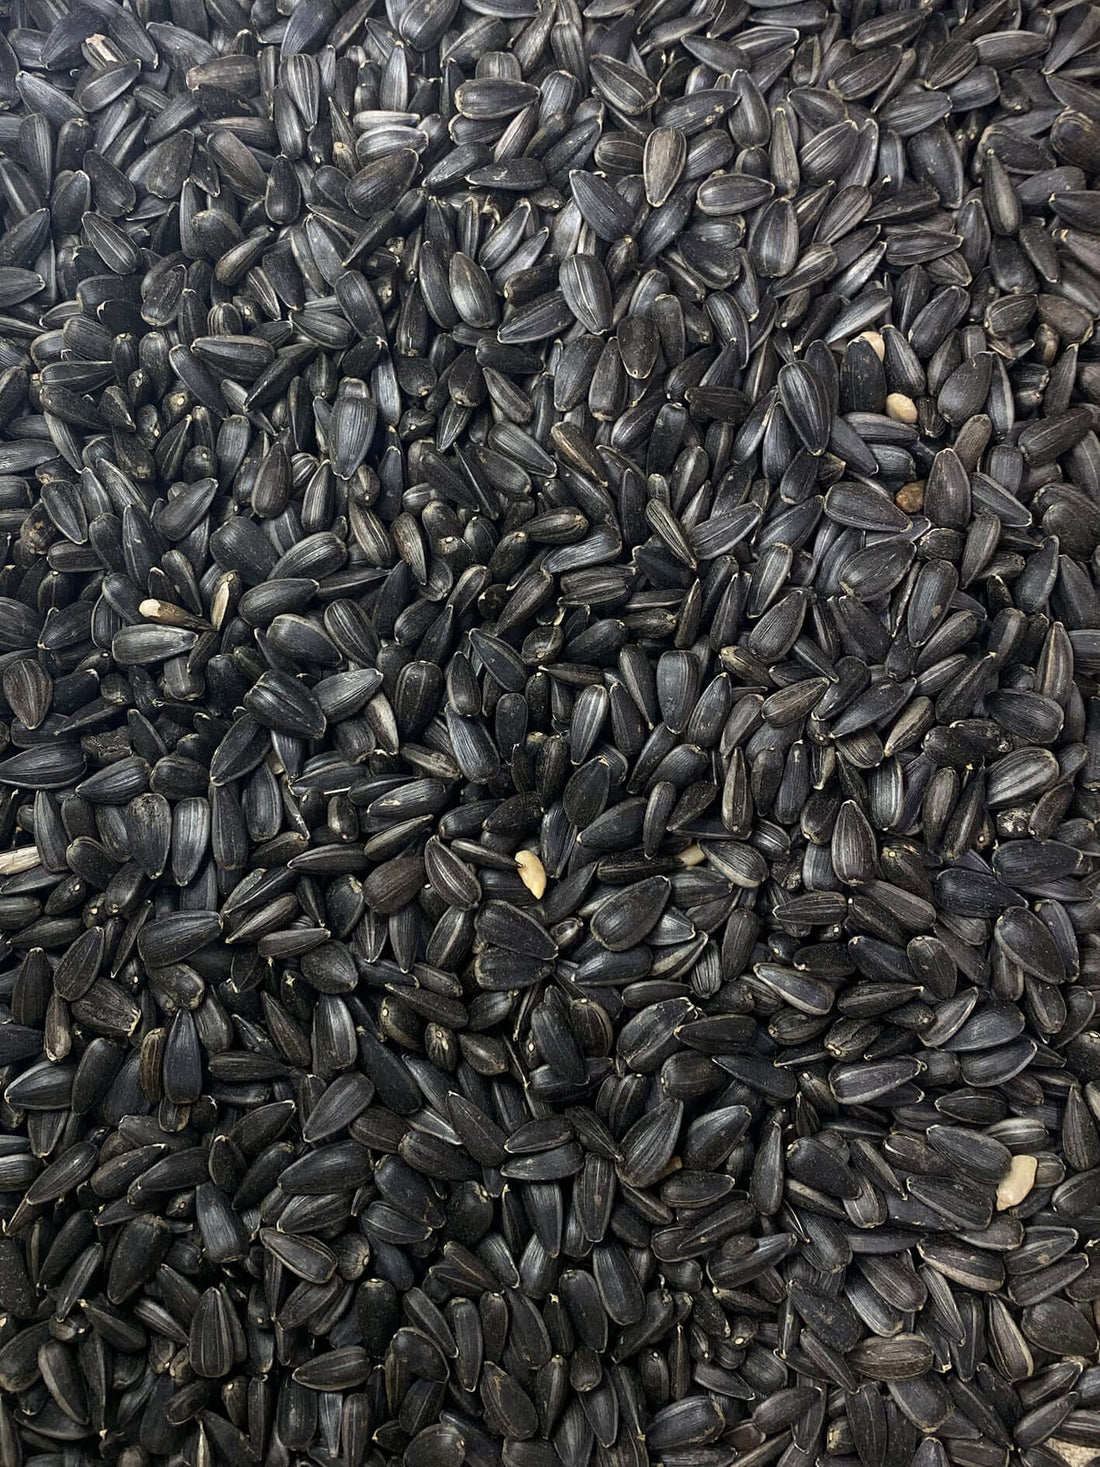 Birds deserve the best: clean black sunflower seeds for happy, healthy birds